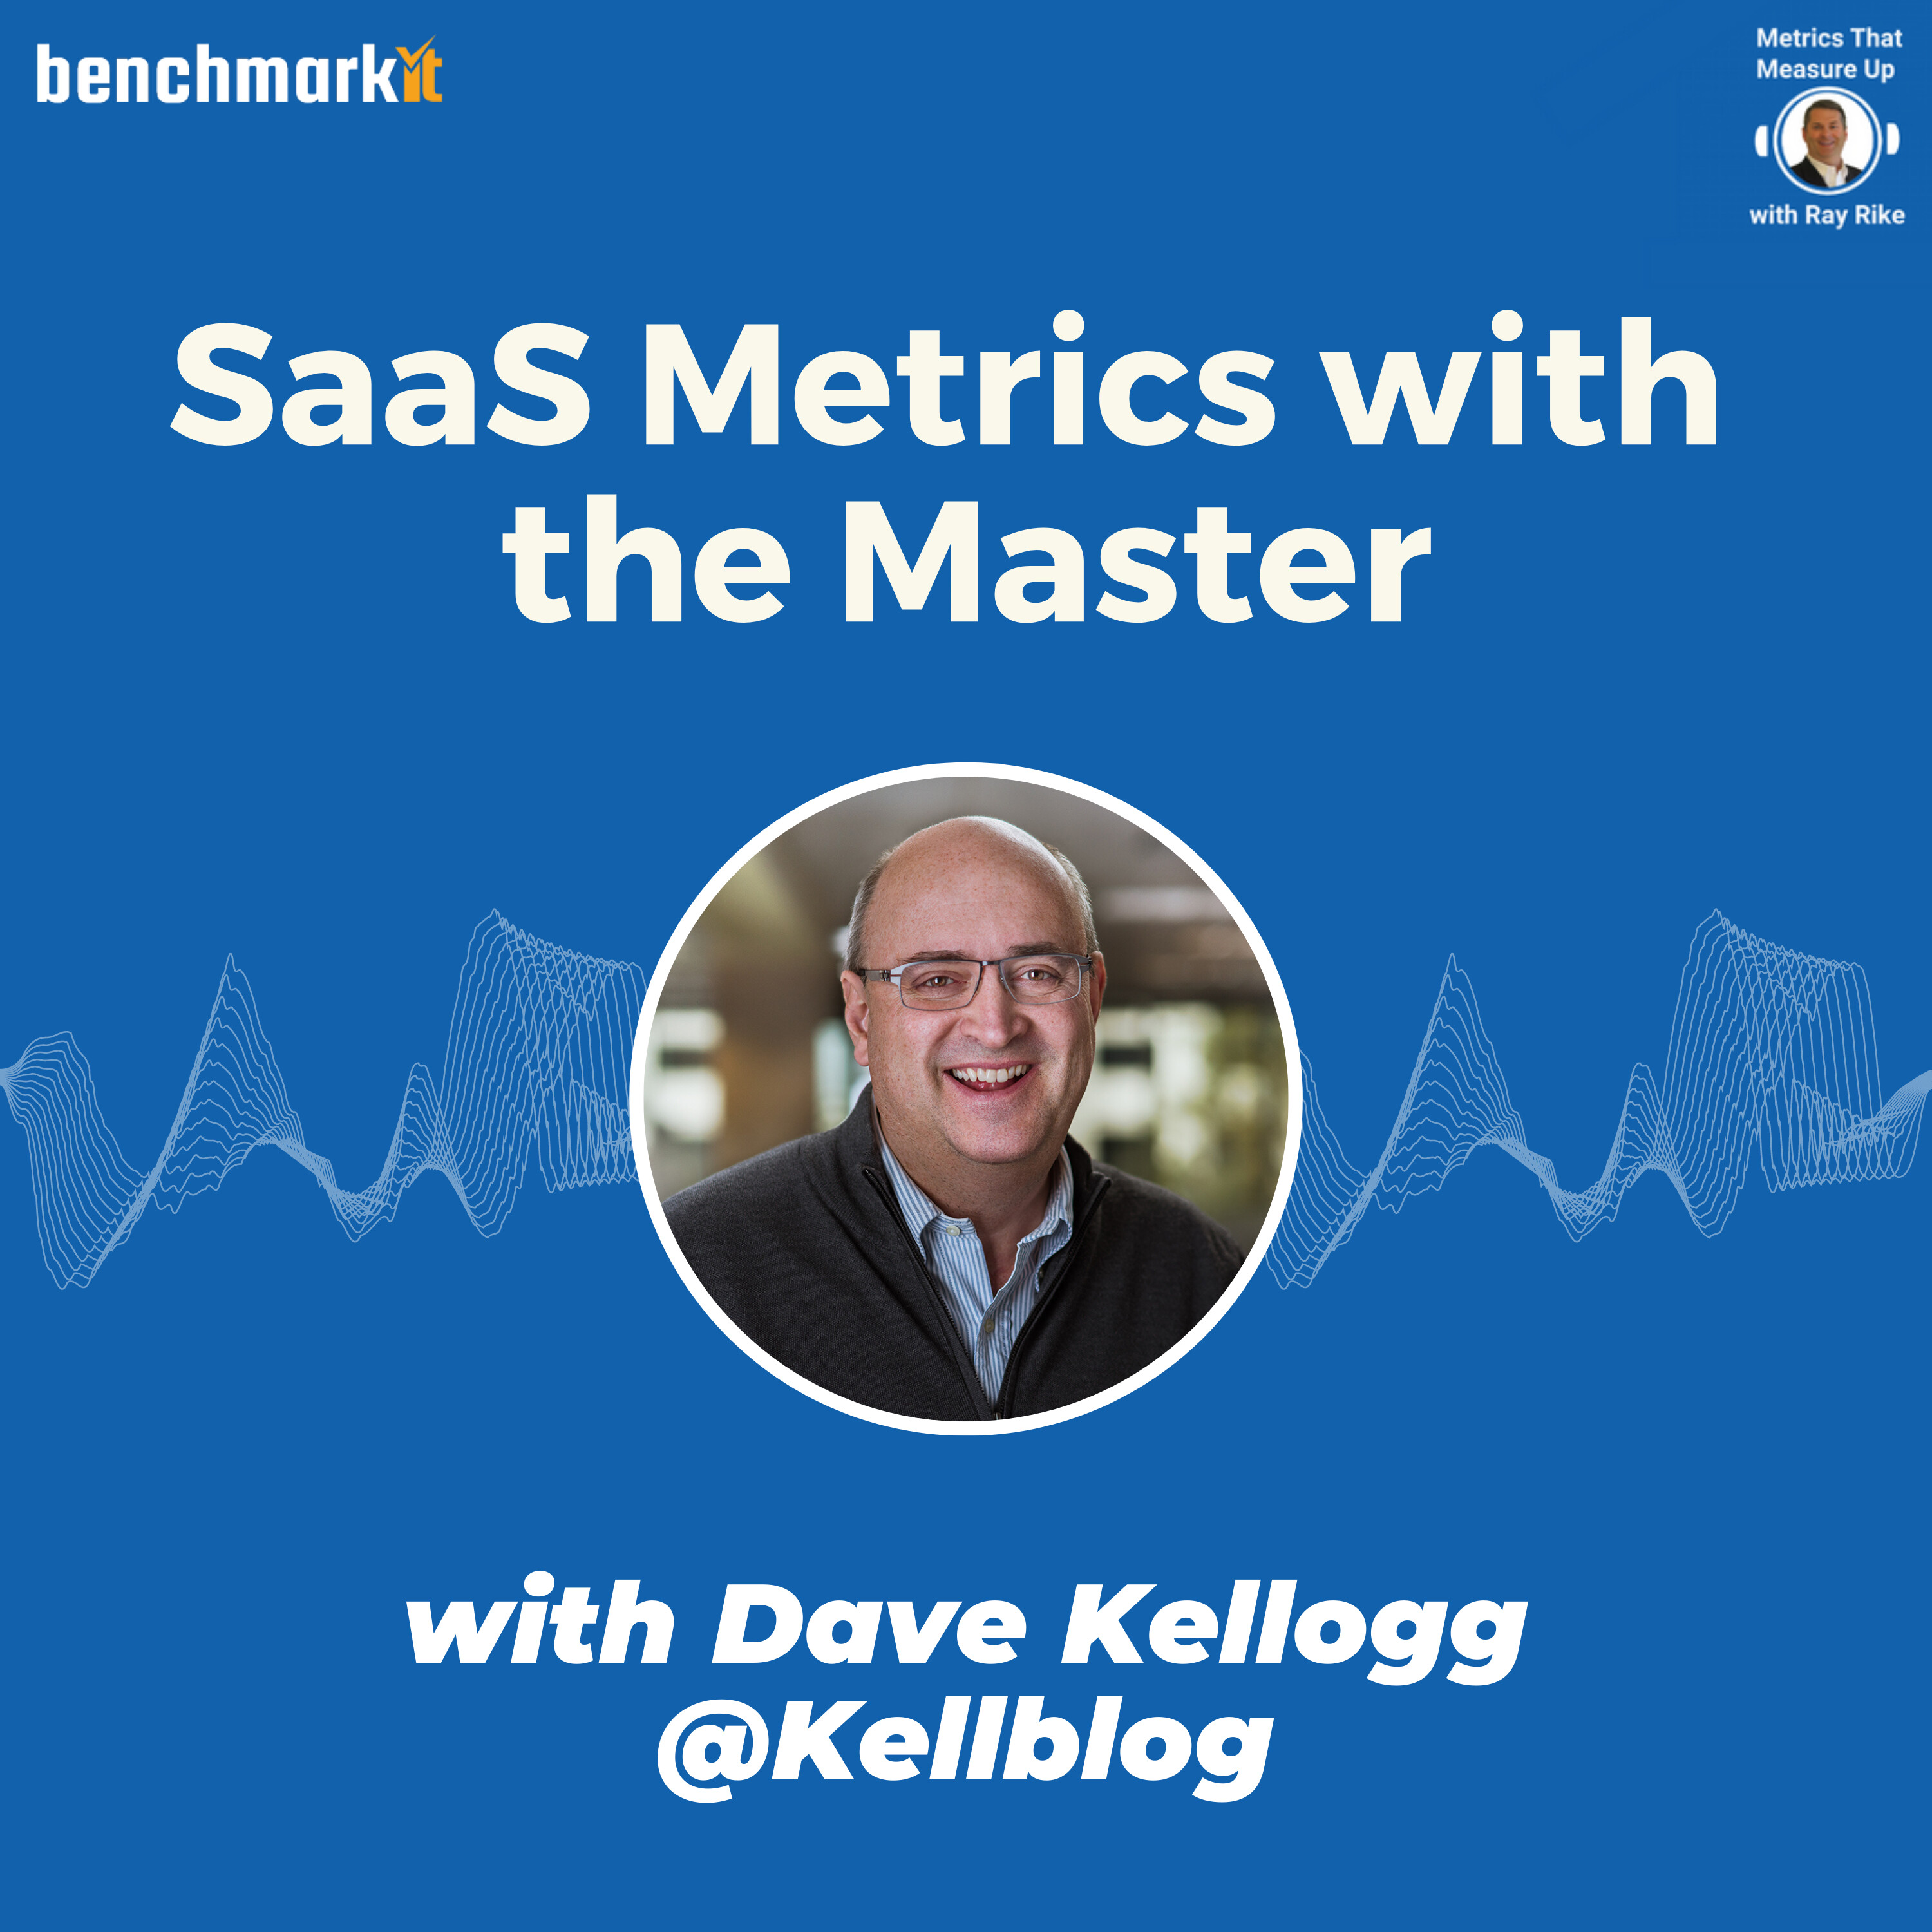 B2B SaaS Metrics with the Master - Dave Kellogg @kellblog